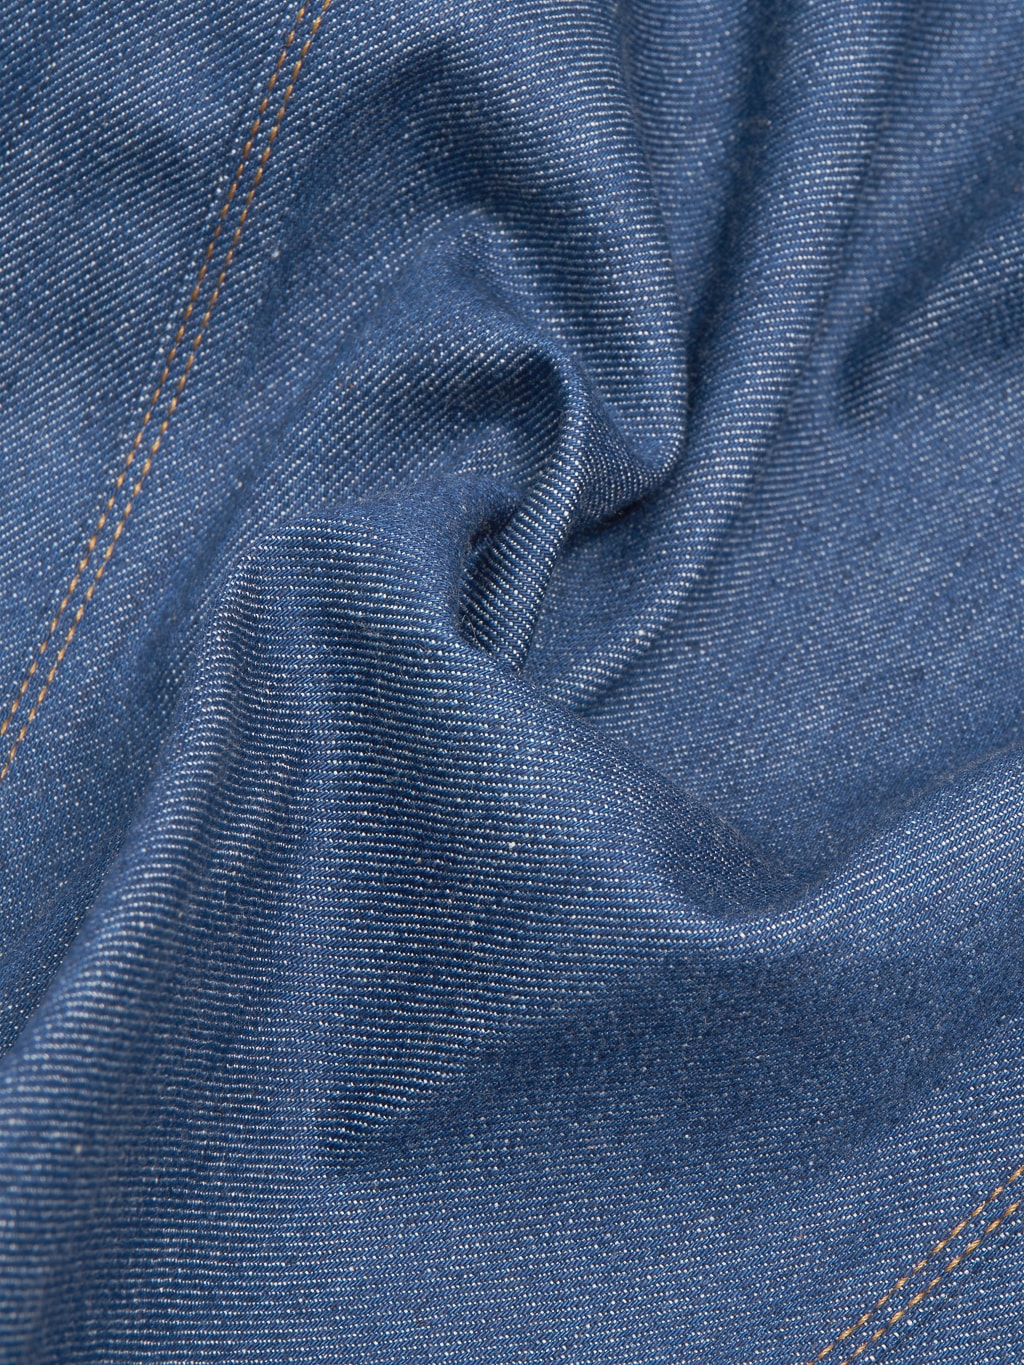 freenote cloth classic denim jacket vintage blue denim texture